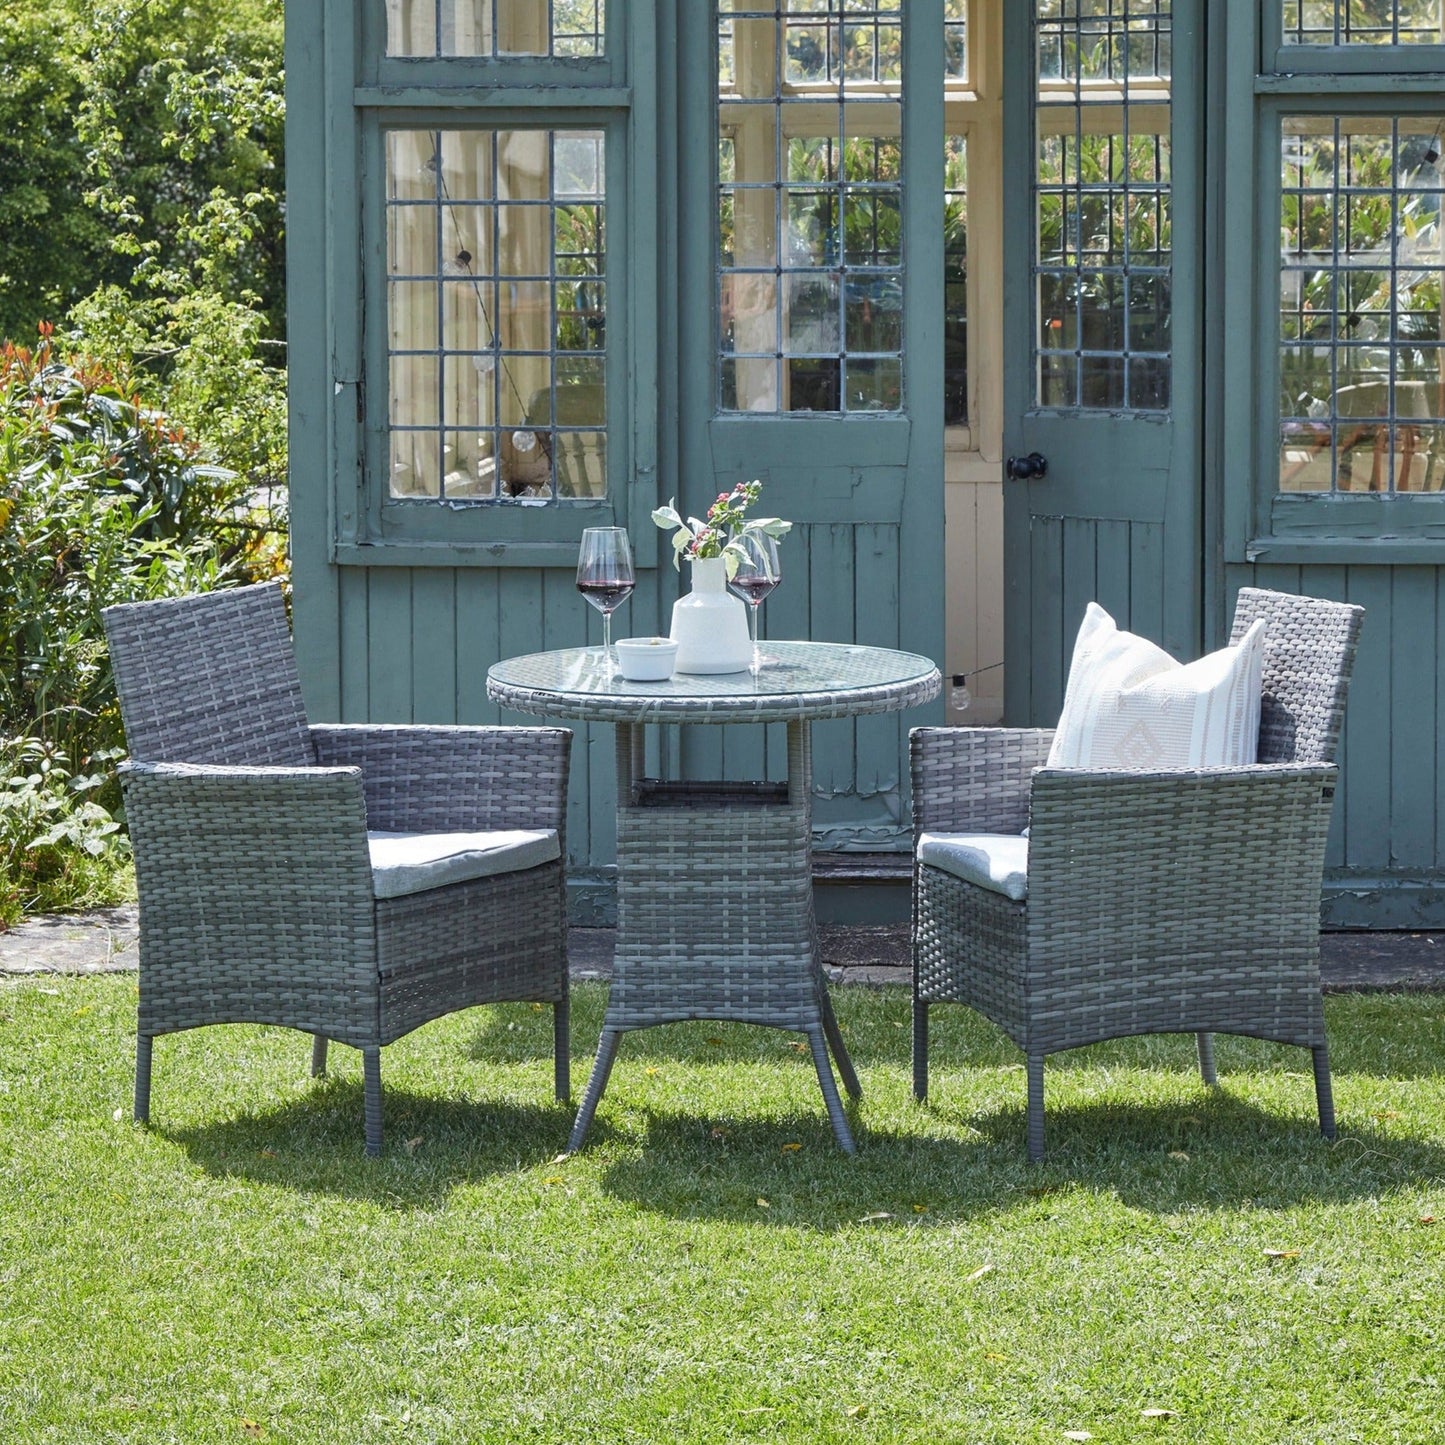 Kemble 2 Seater Rattan Bistro Dining Set in Grey - Garden Furniture